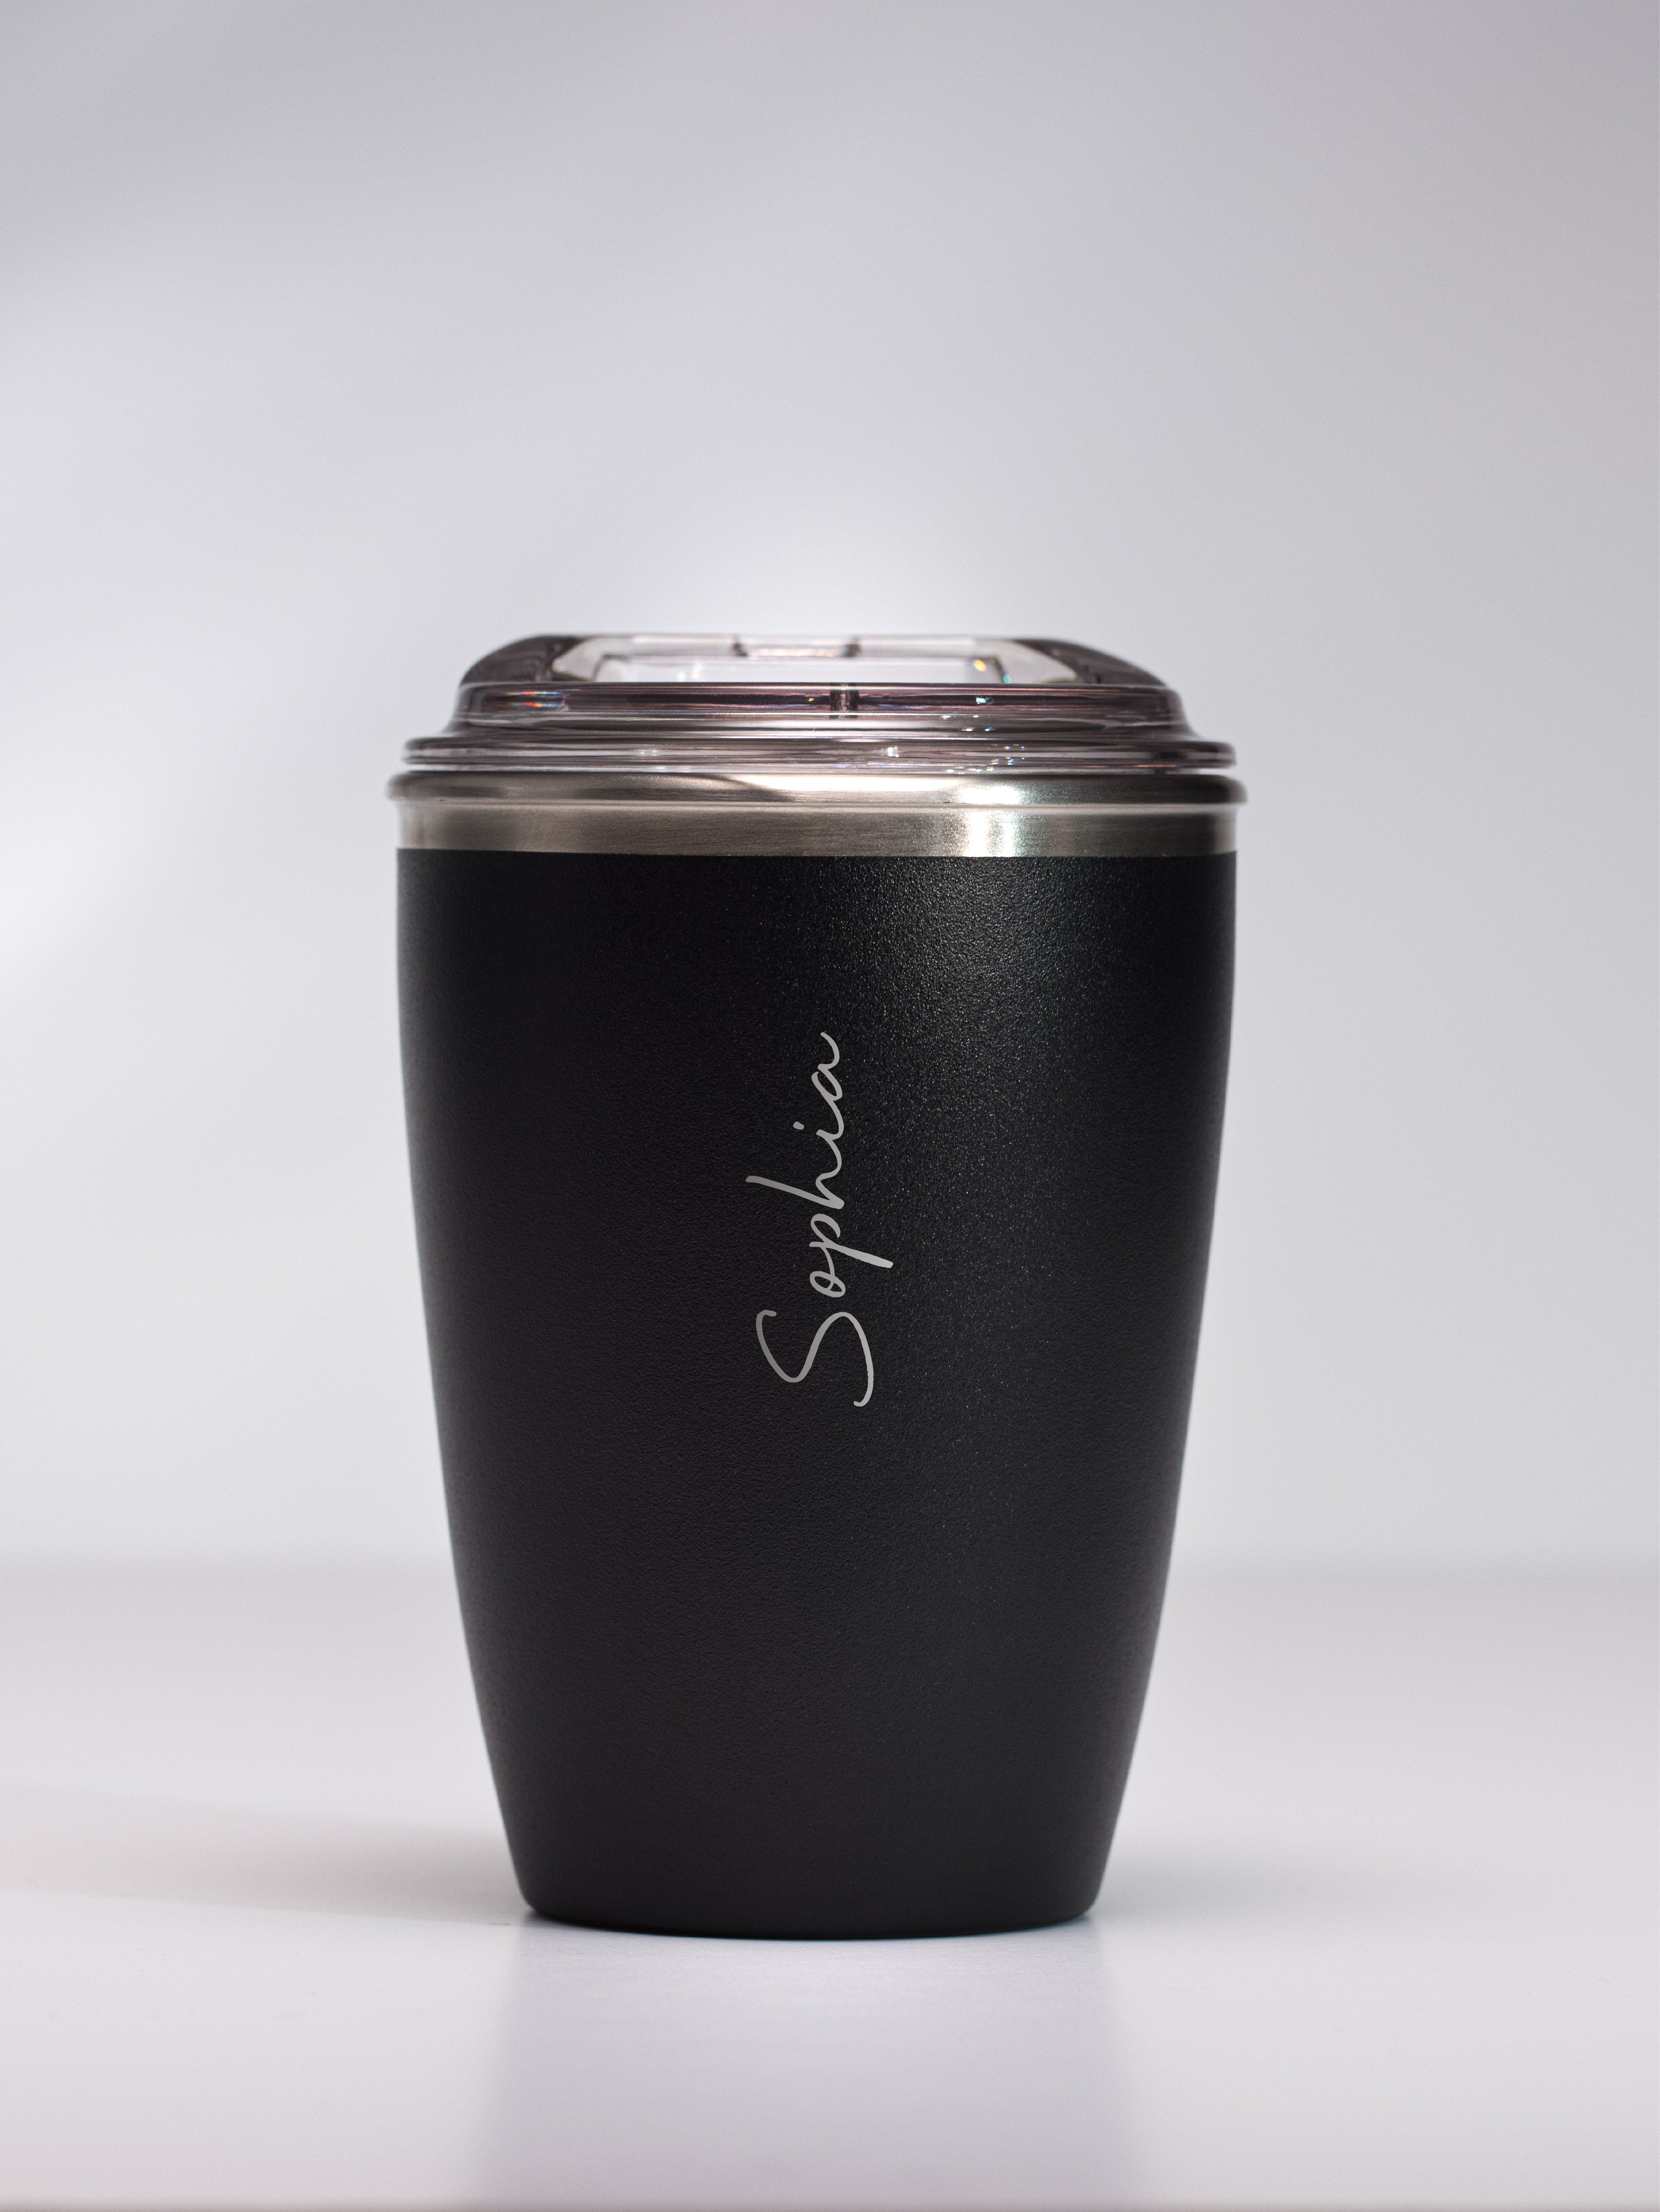 New Zealand's Bullet Travel Mug: Custom Stainless Steel Cup